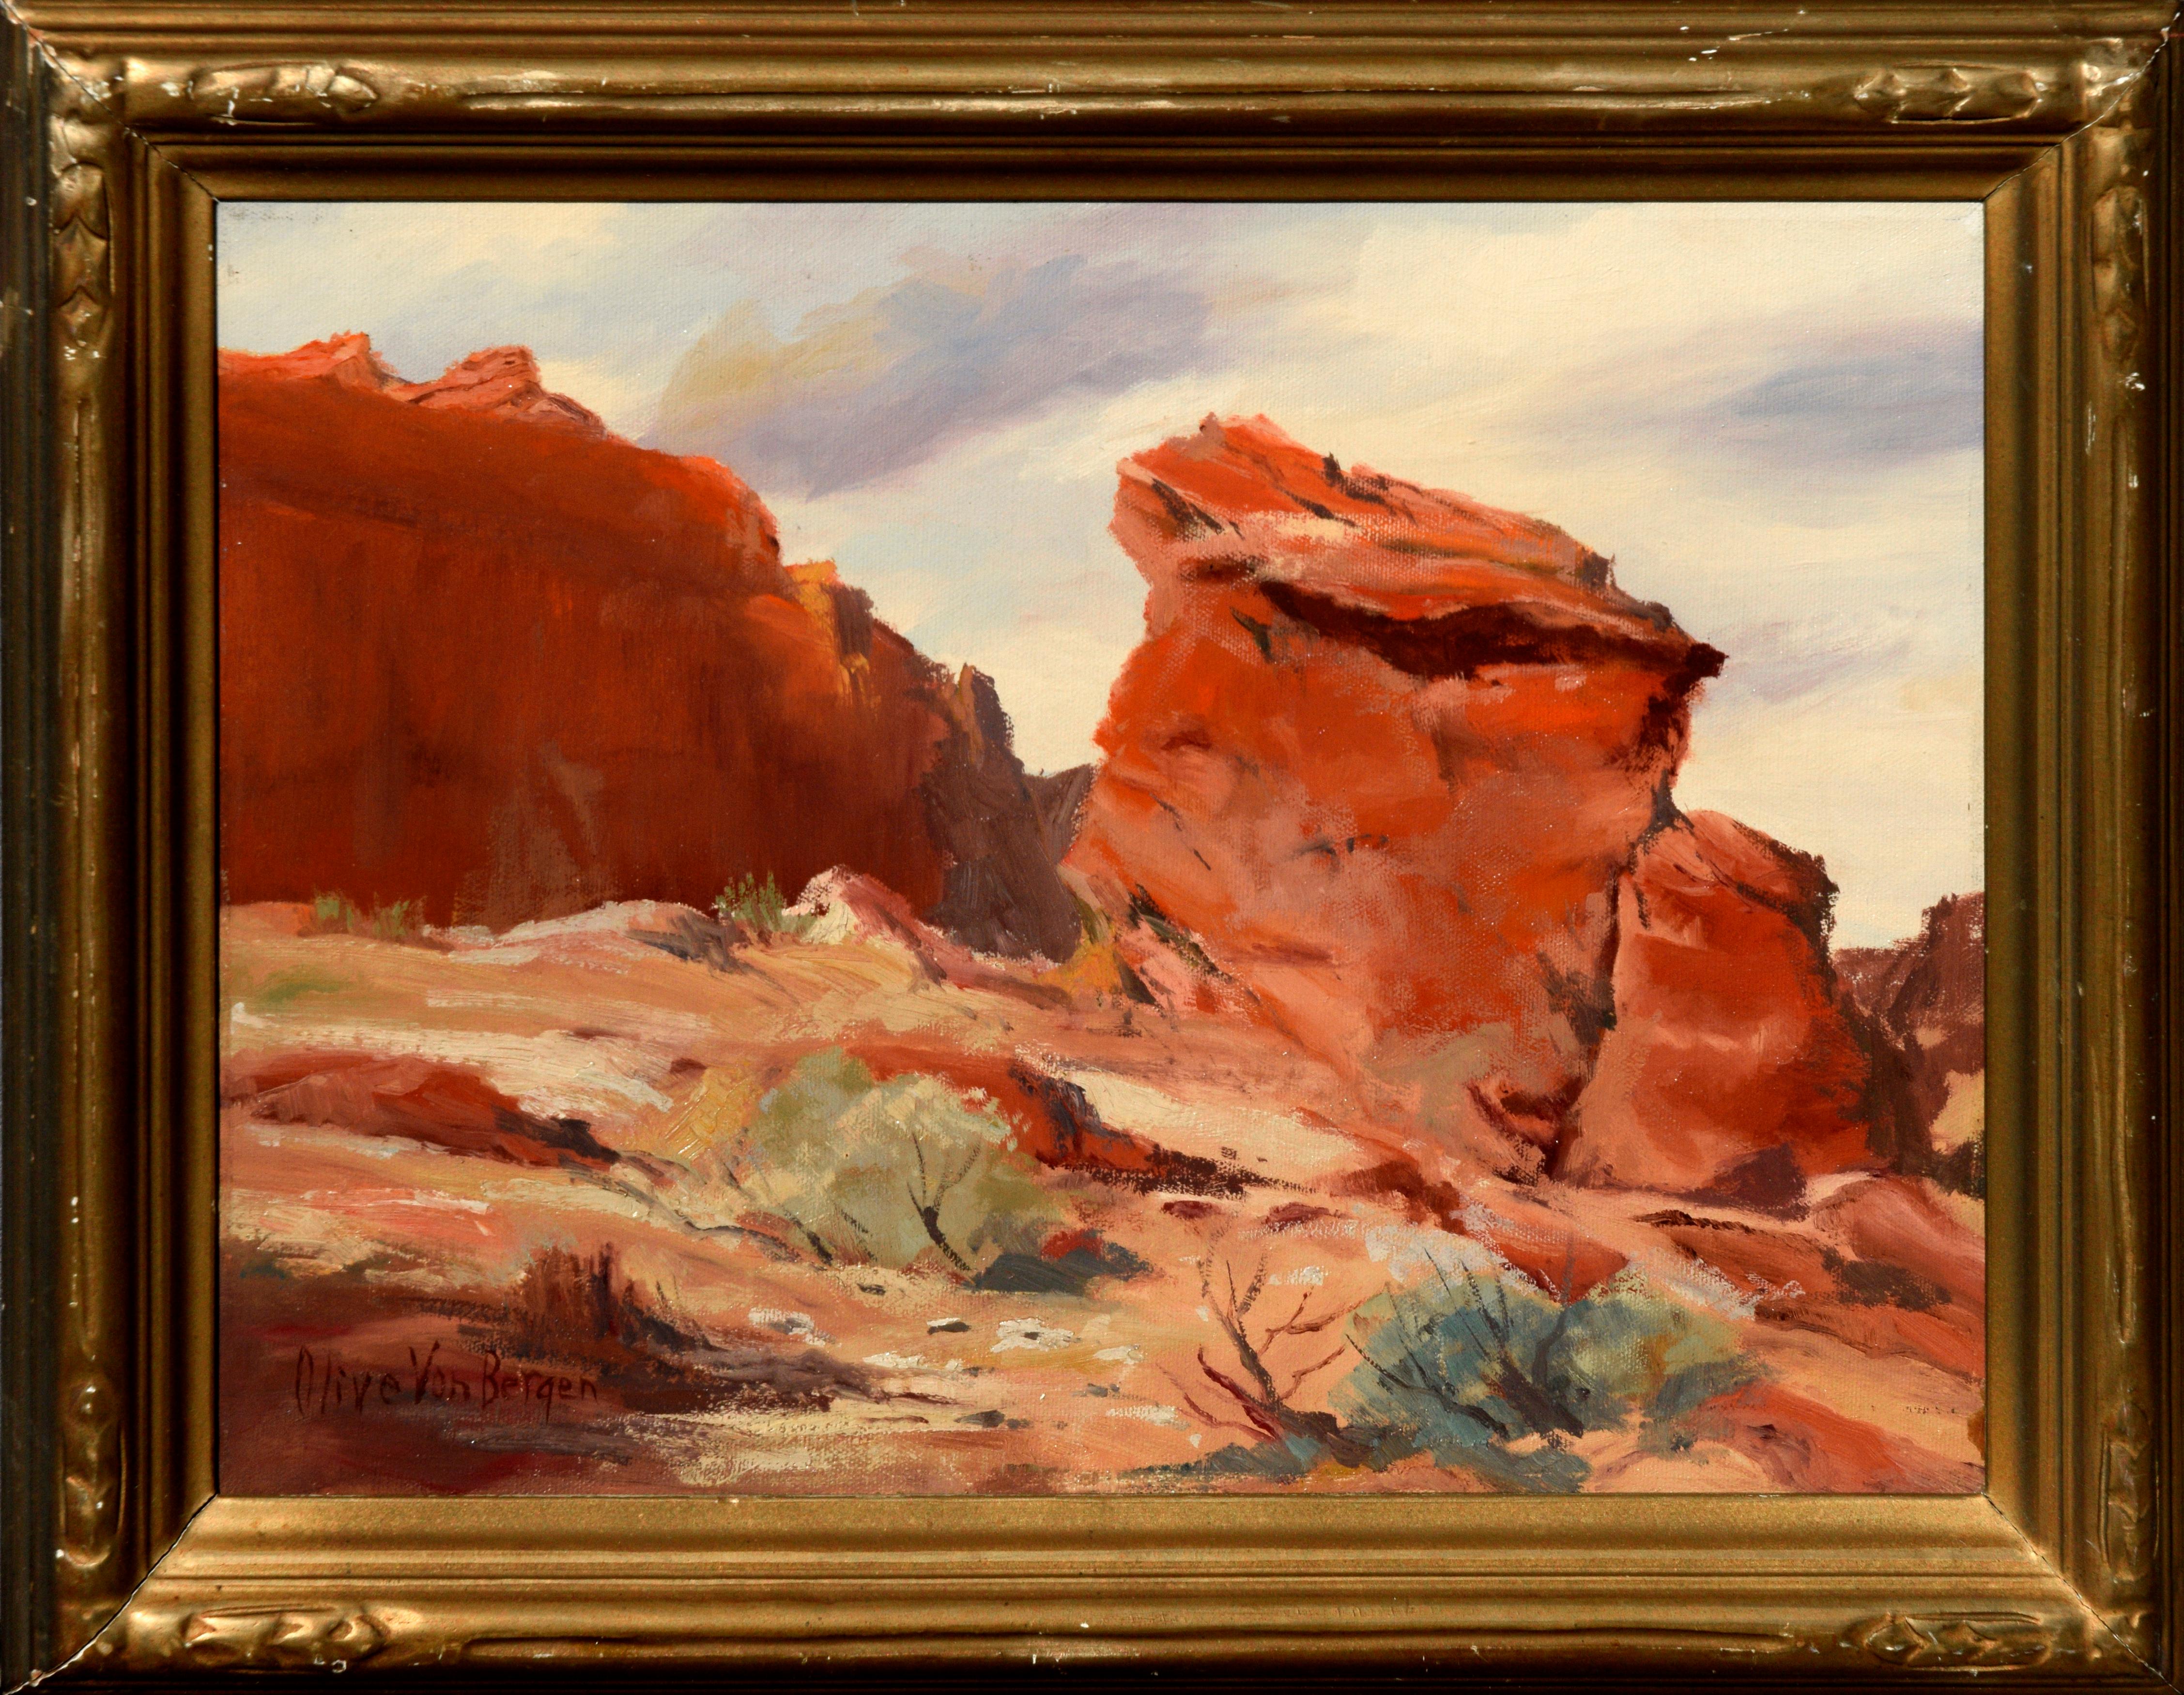 Olive Von Bergen Landscape Painting - 1940s Desert Red Rocks Landscape 